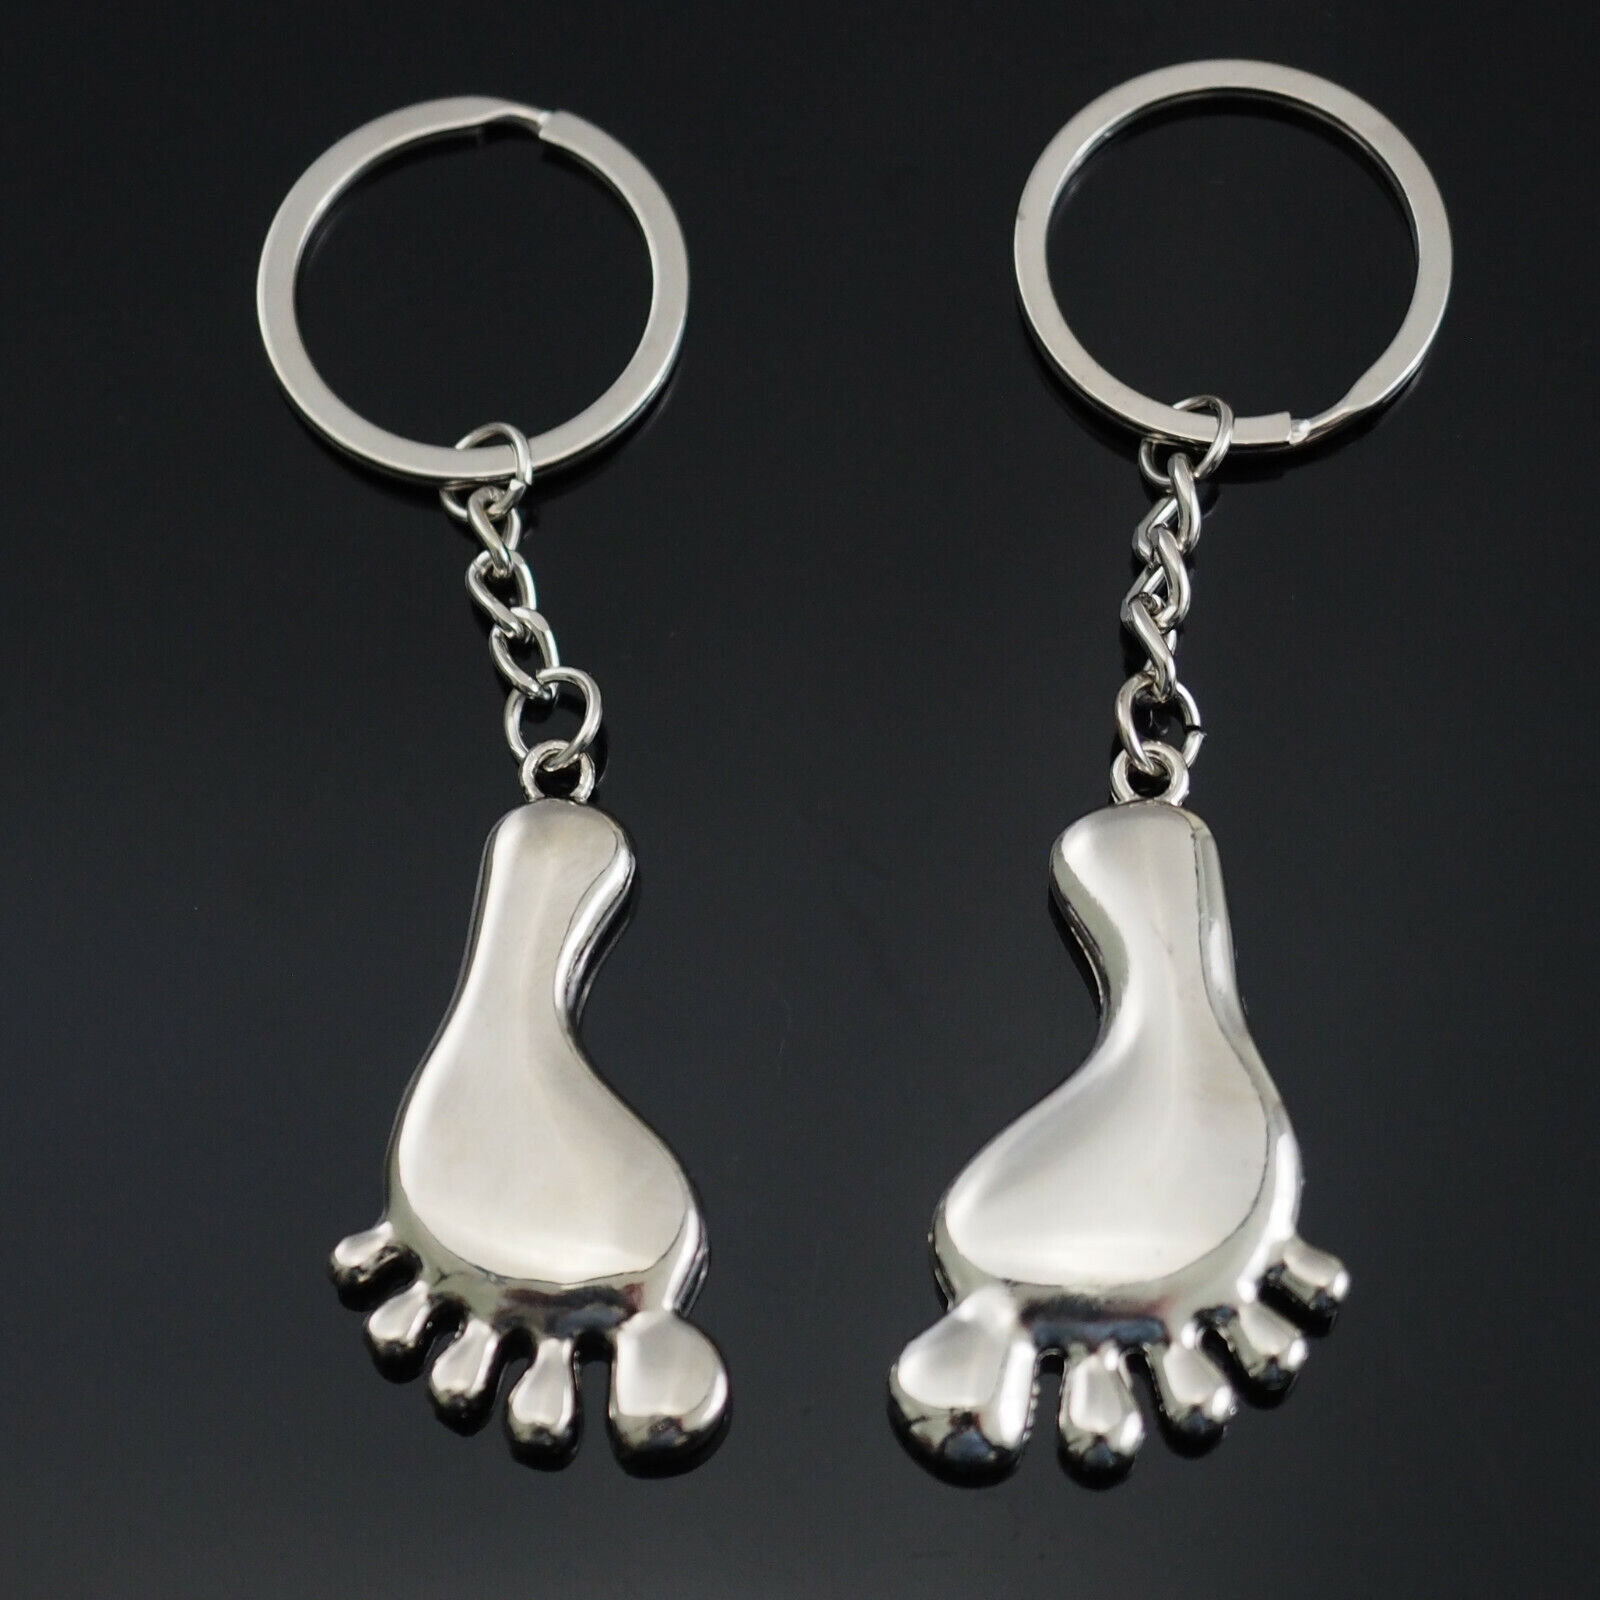 2x PCS Bigfoot Sasquatch Yeti Big Foot Toes Keychain Key Chain Metal Charm Gift